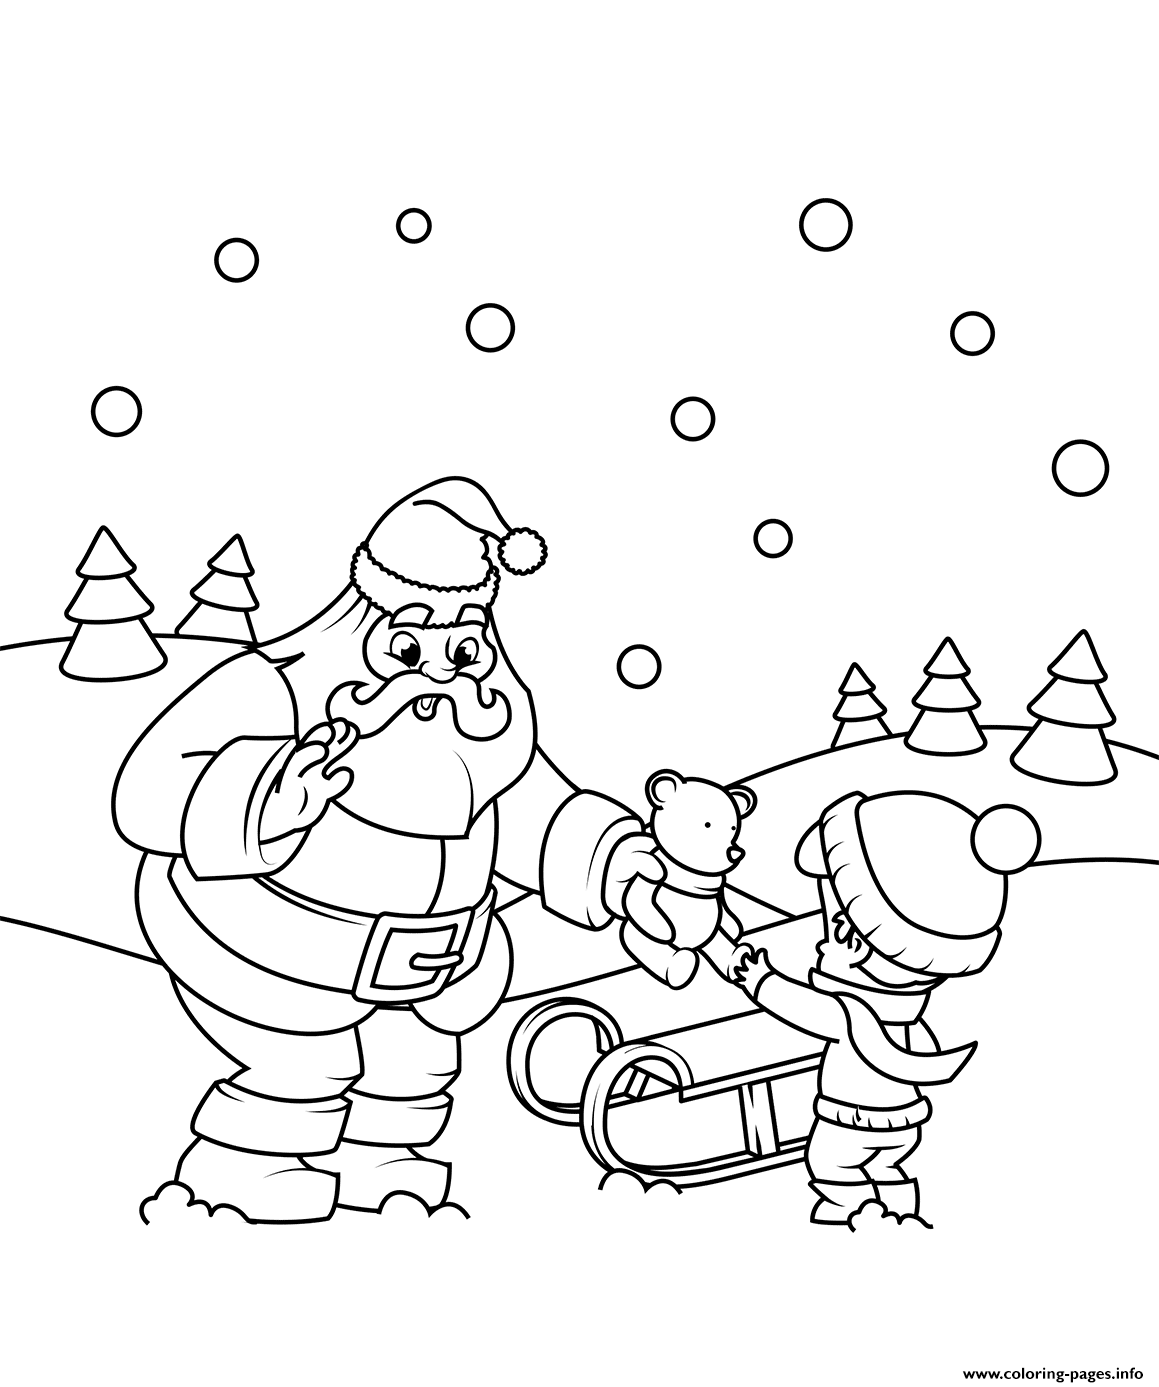 Santa Gives A Gift To A Boy Christmas coloring